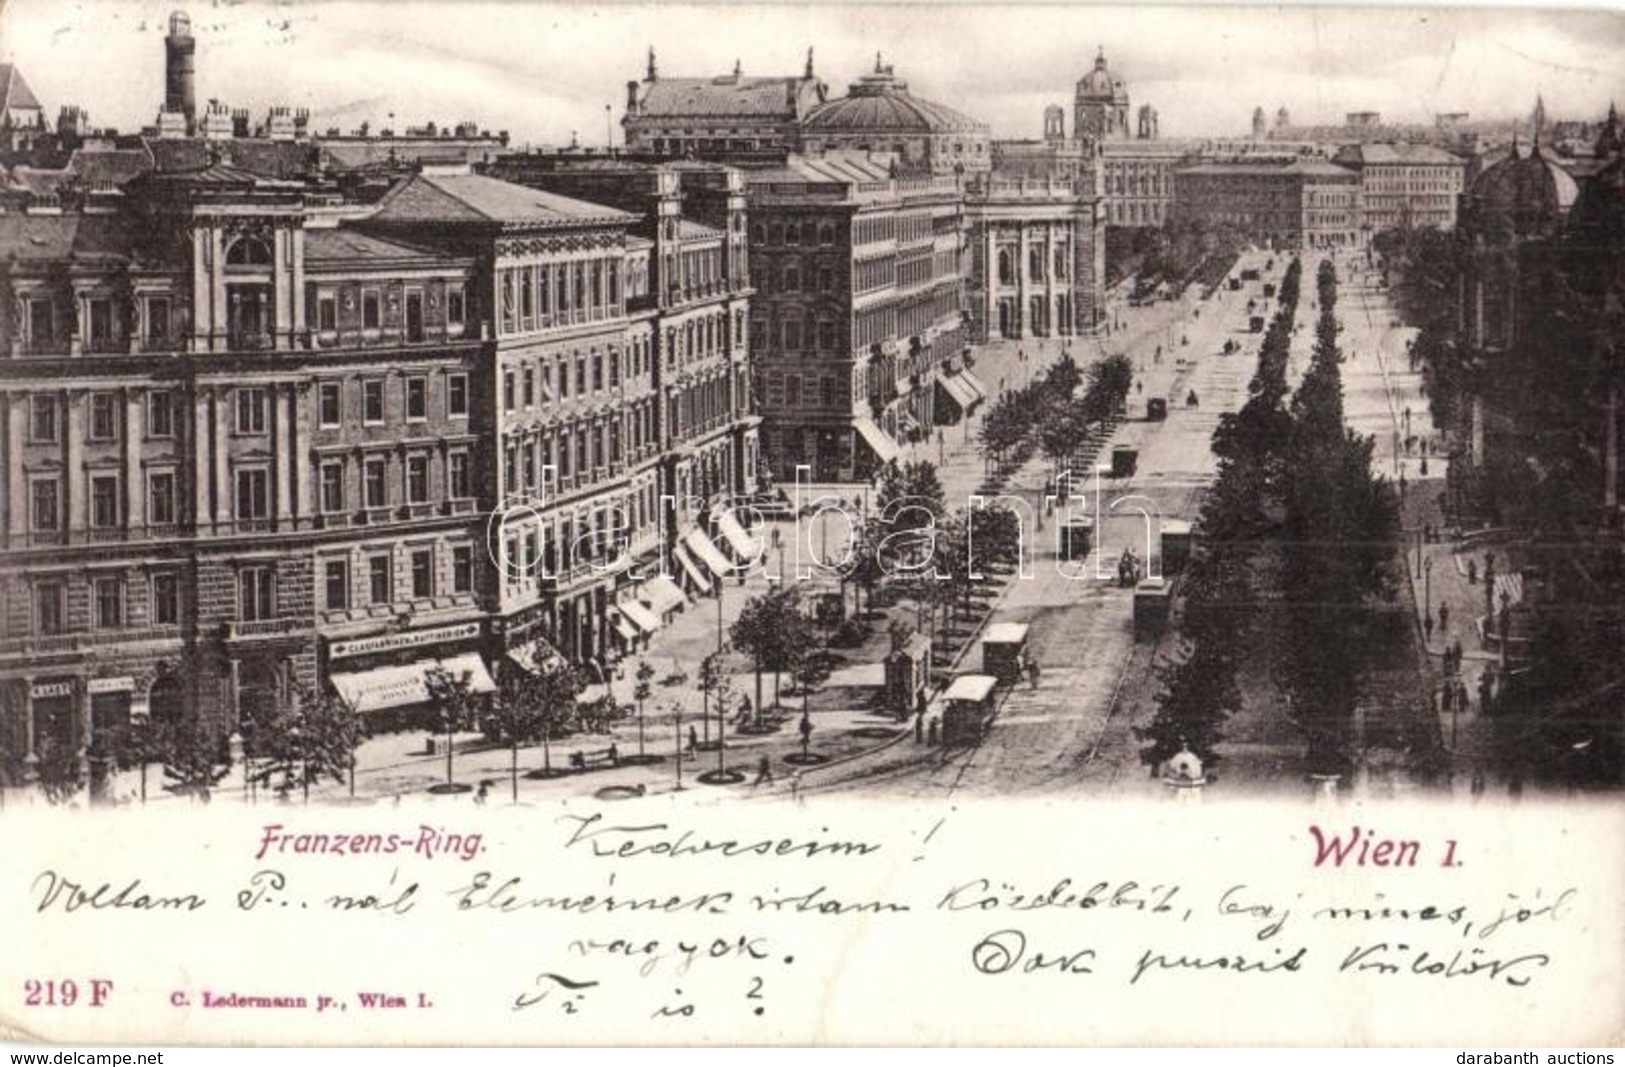 T2/T3 1900 Vienna, Wien I. Franzens-Ring / Street View, Shops, Trams. C. Ledermann Jr. 219 F (EK) - Non Classés